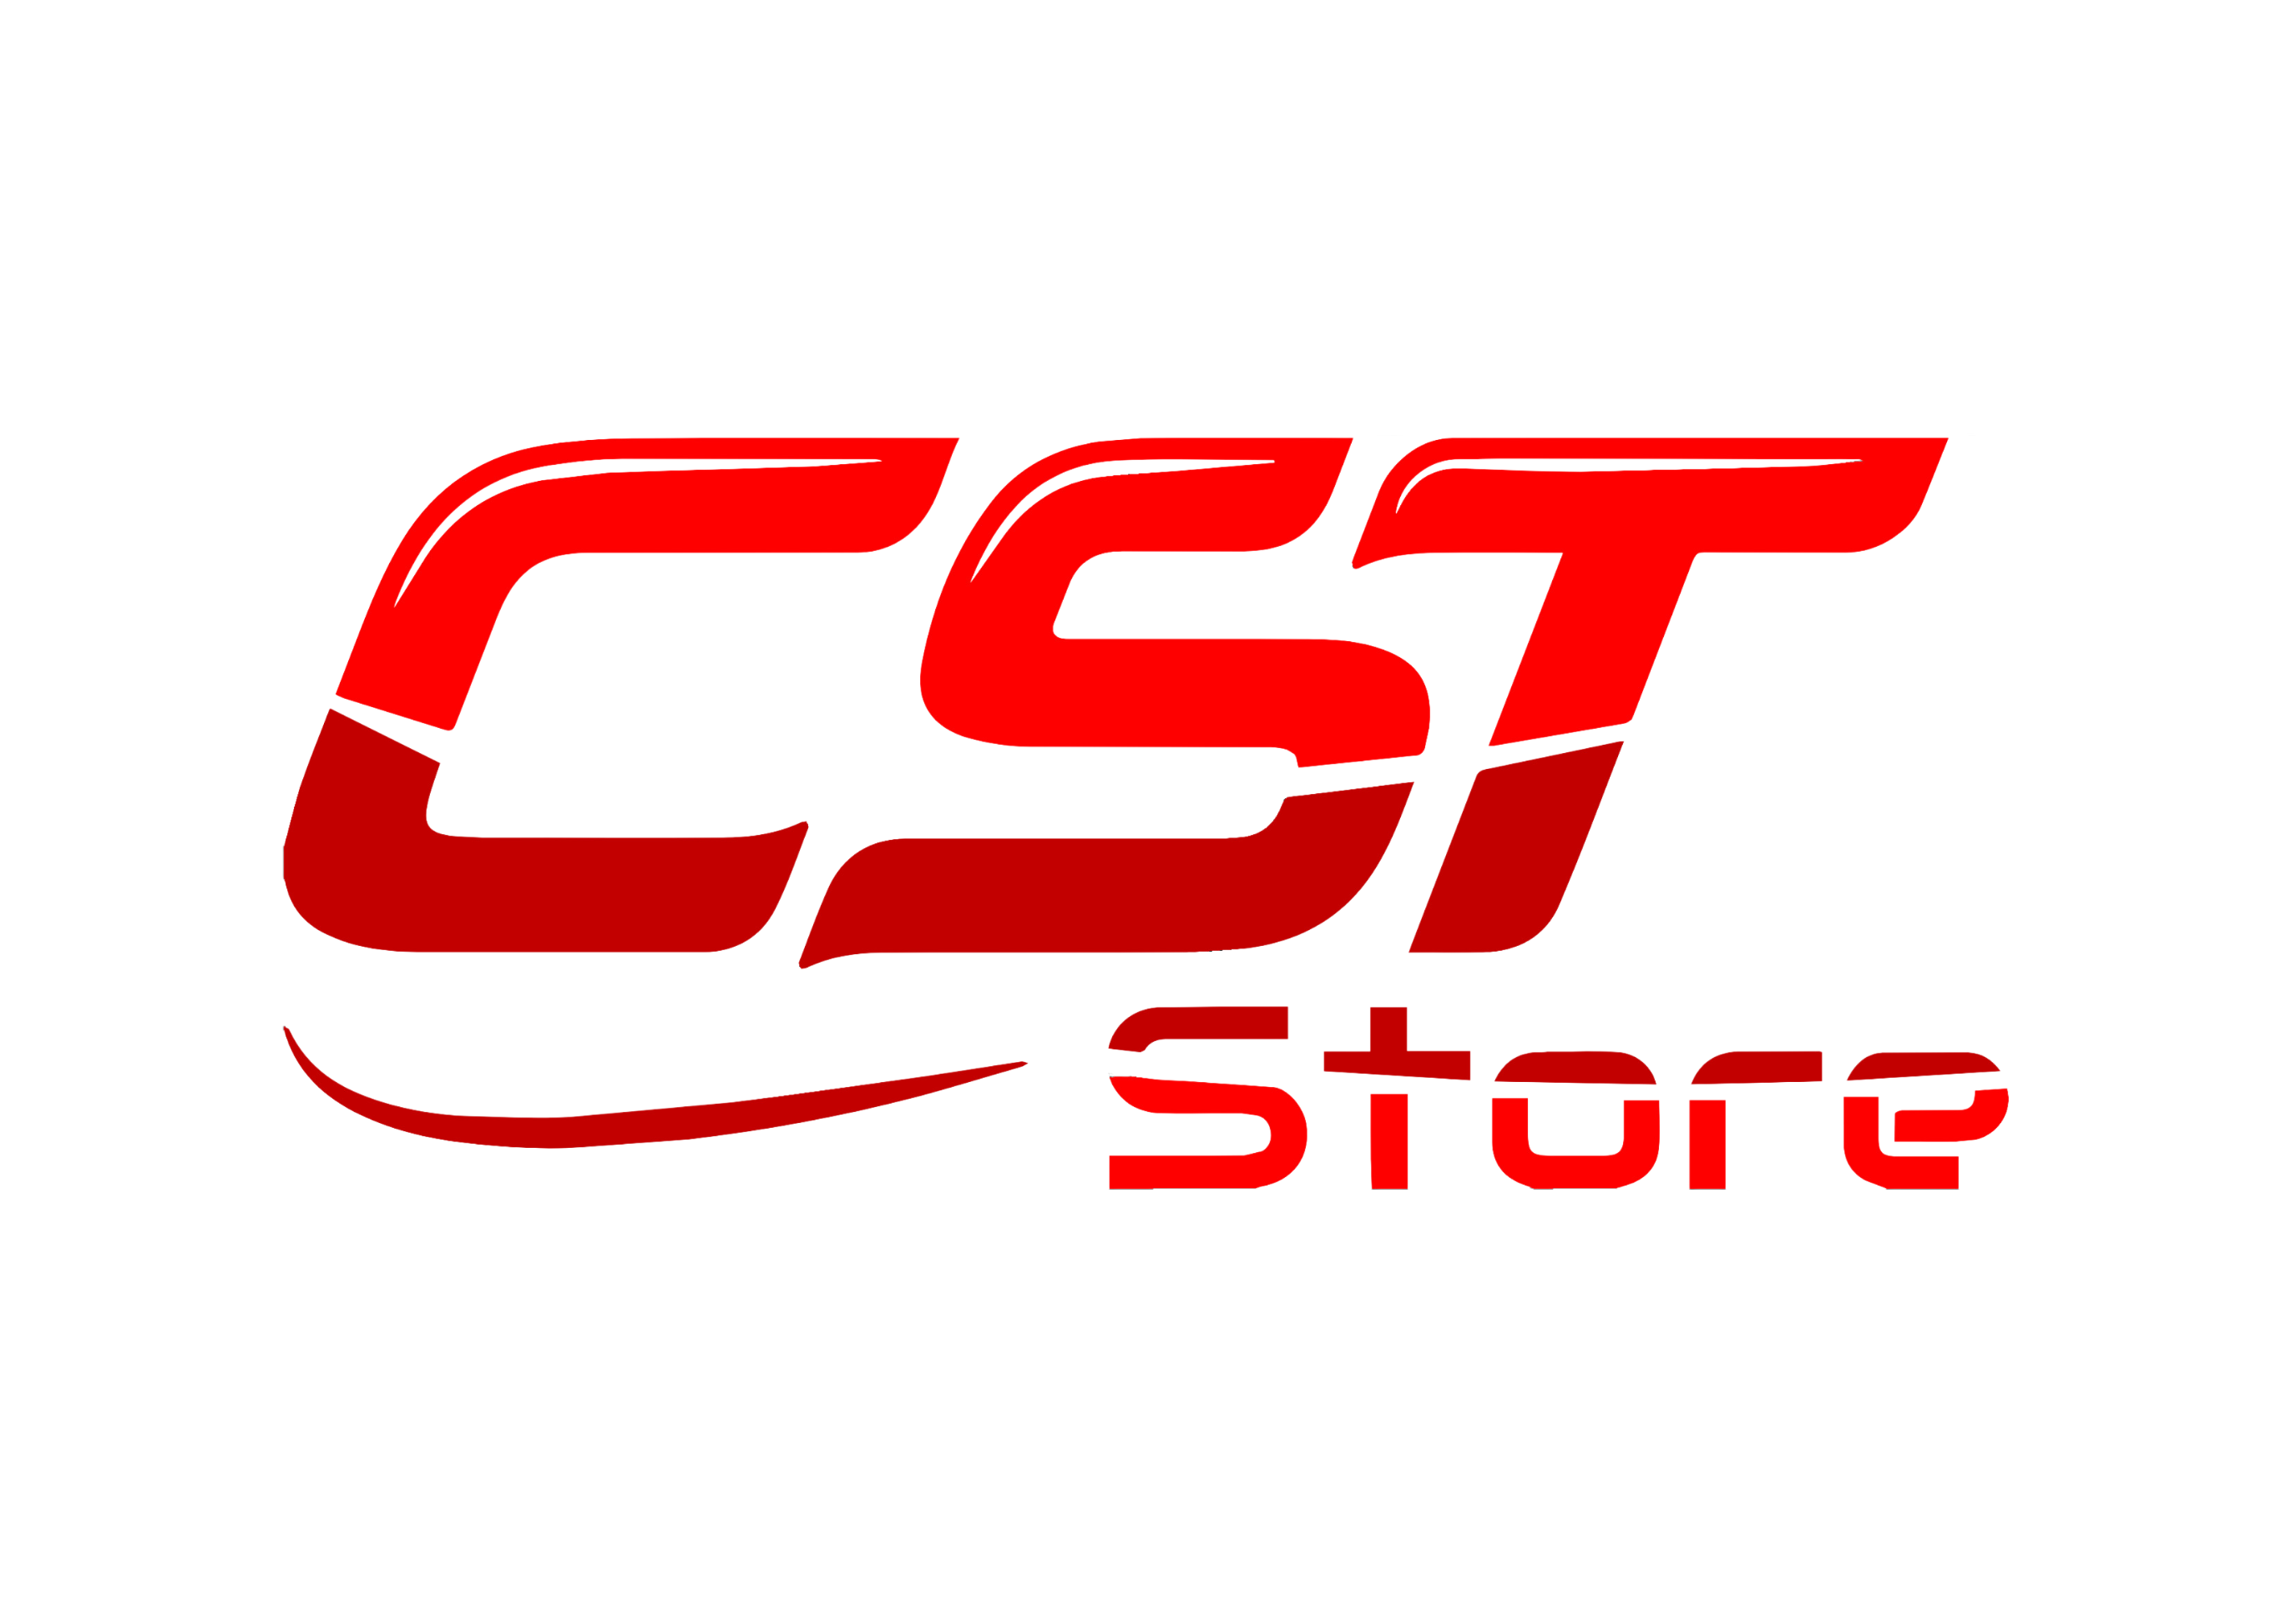 CstStore